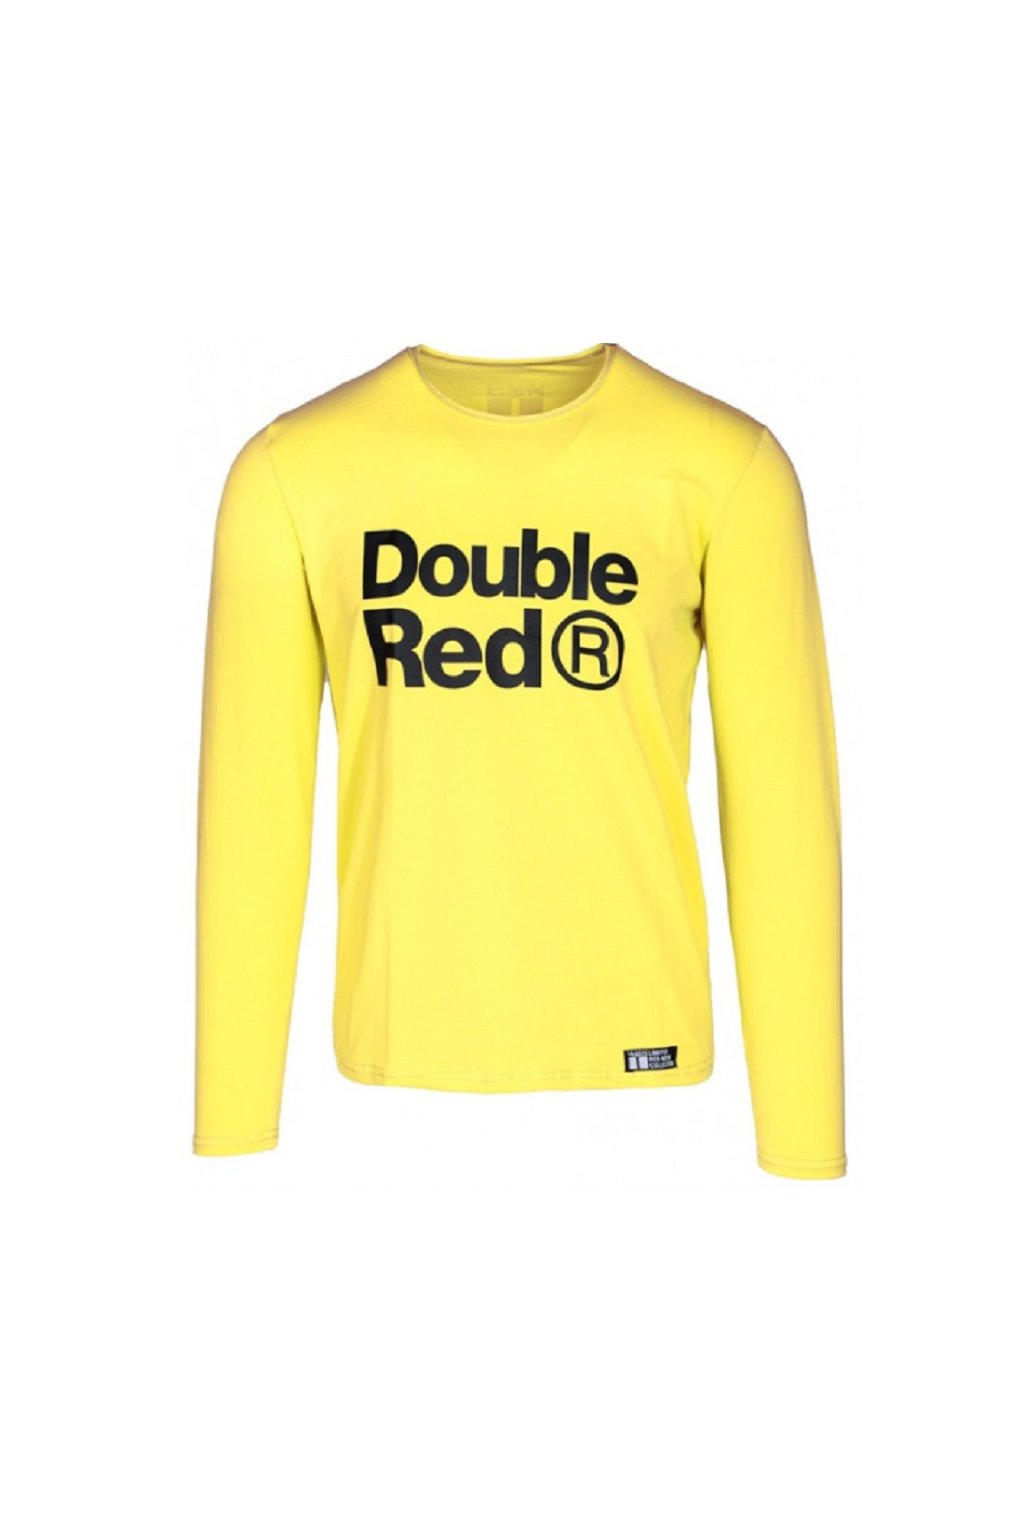 Double Red pánské triko s dlouhým rukávem Red Neon Long Sleeve Yellow obr1